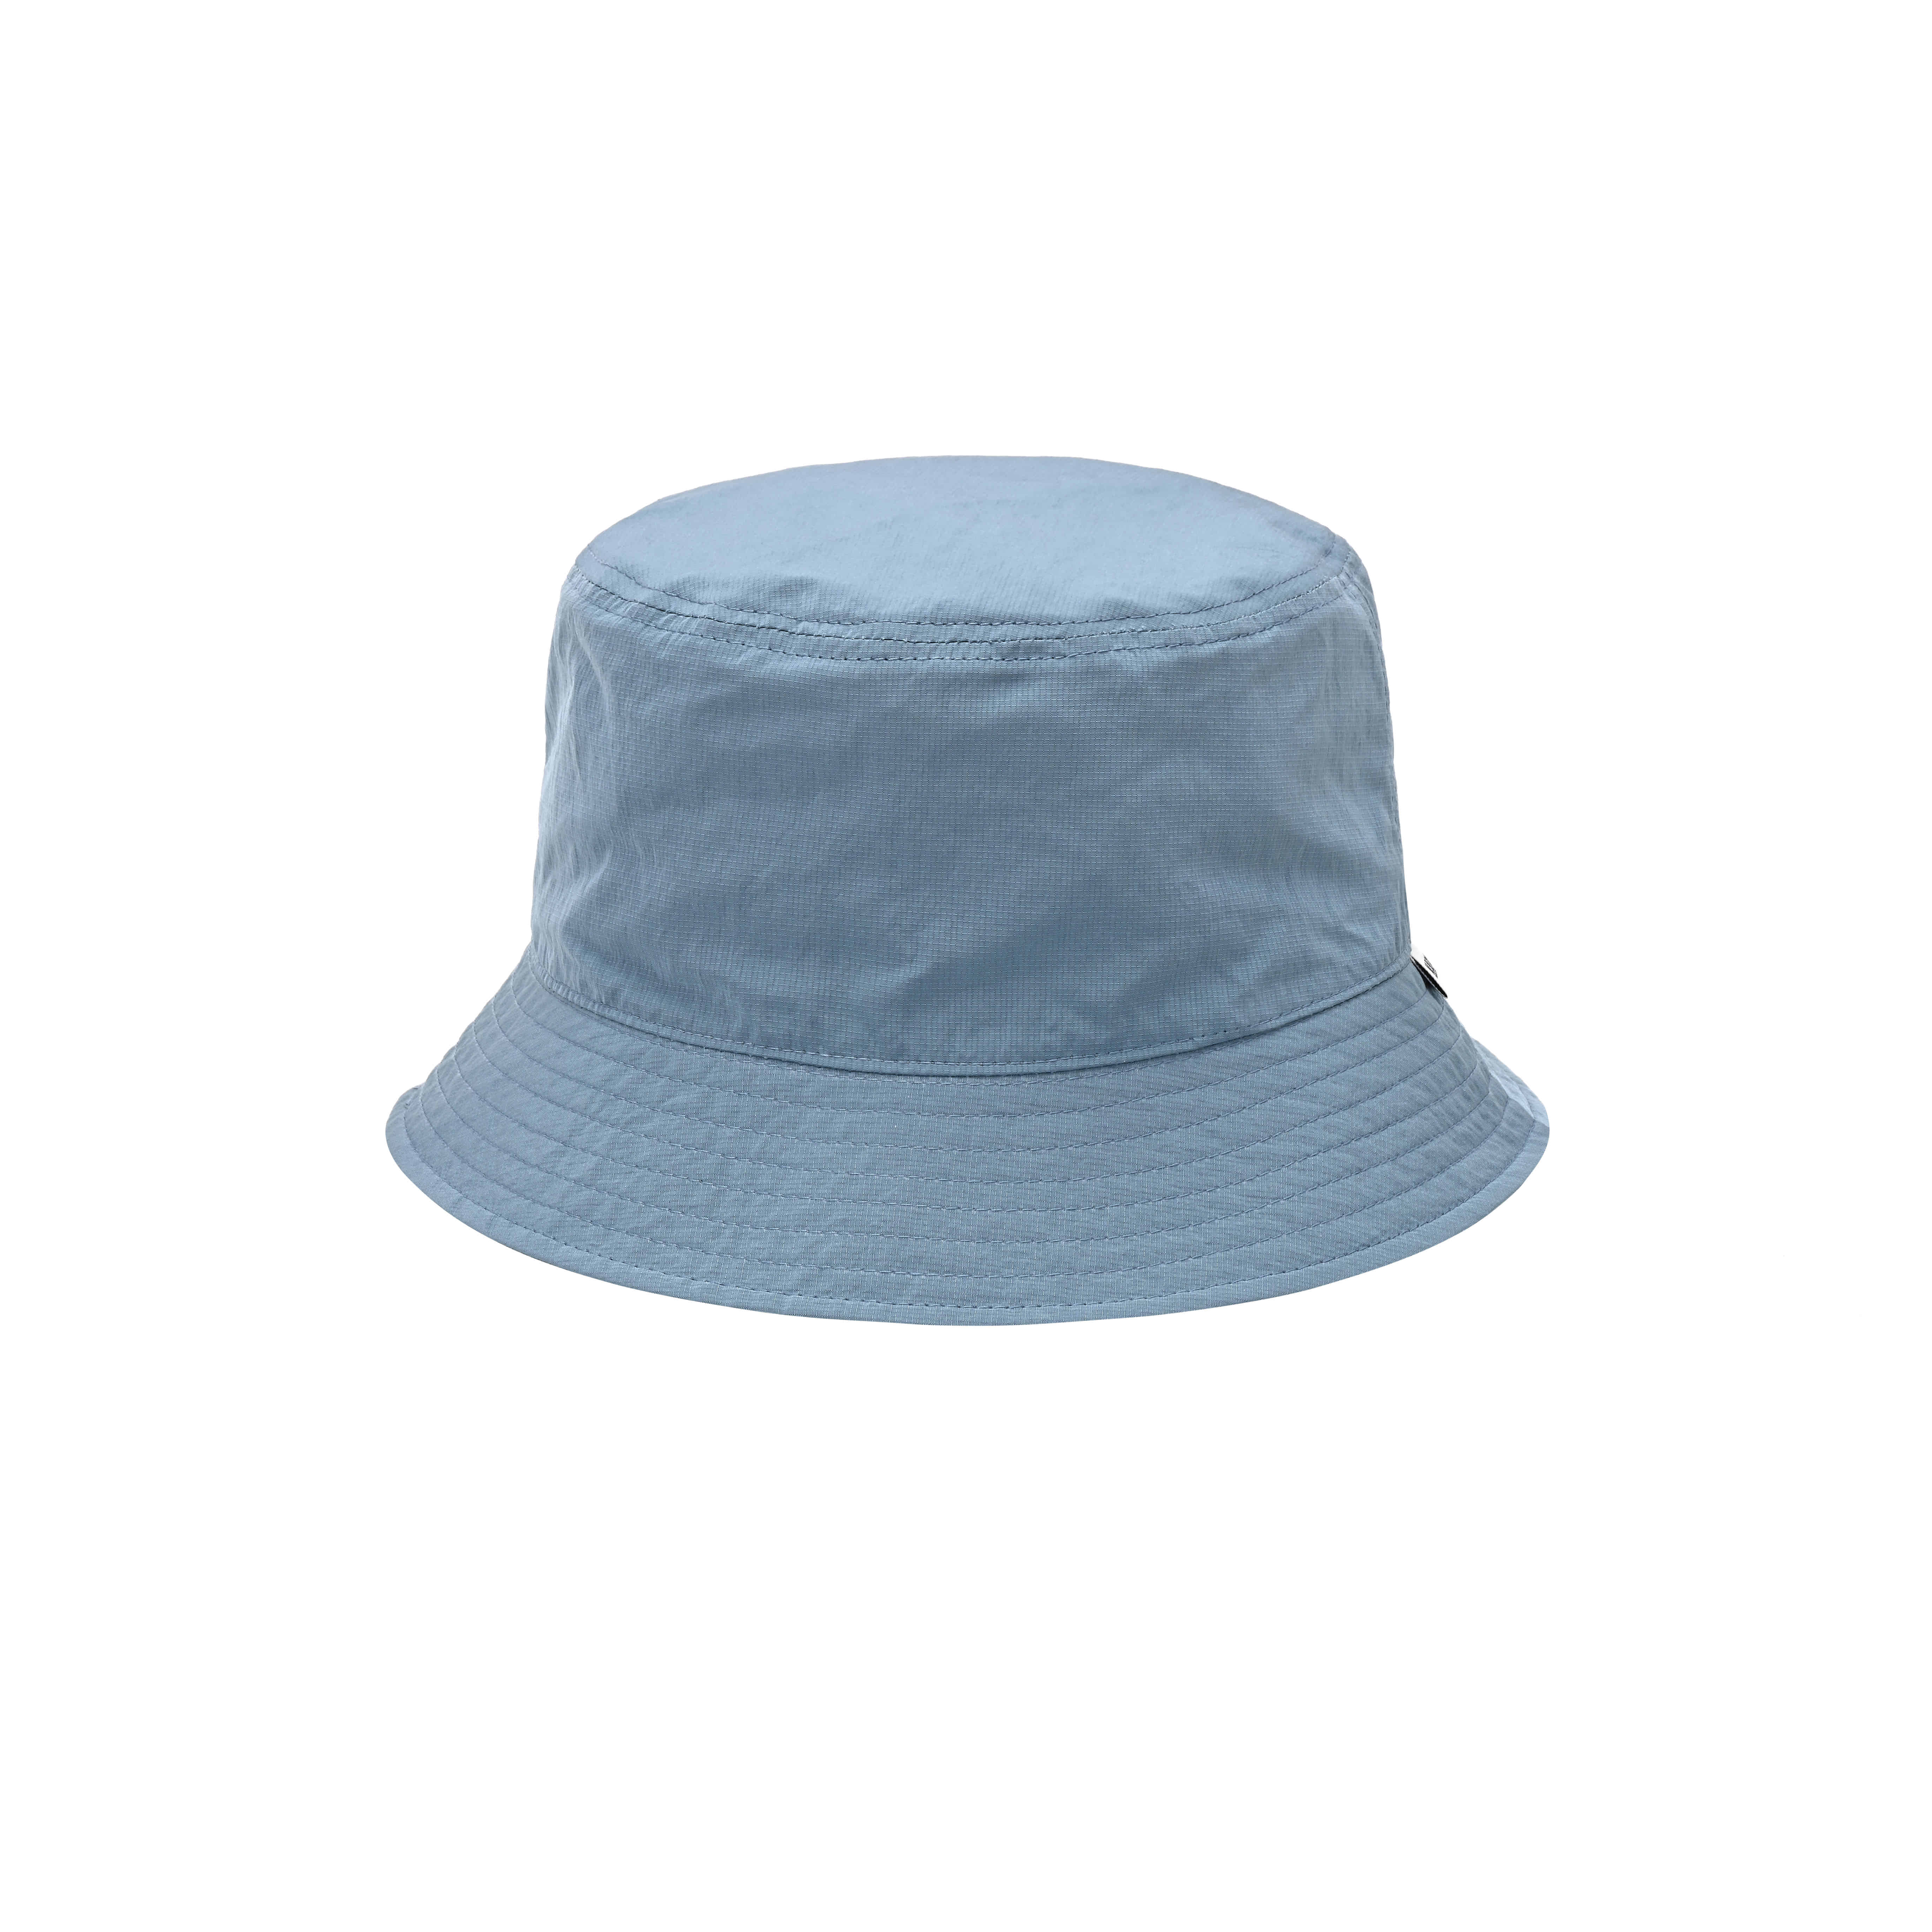 Reversible bucket hat blue gray